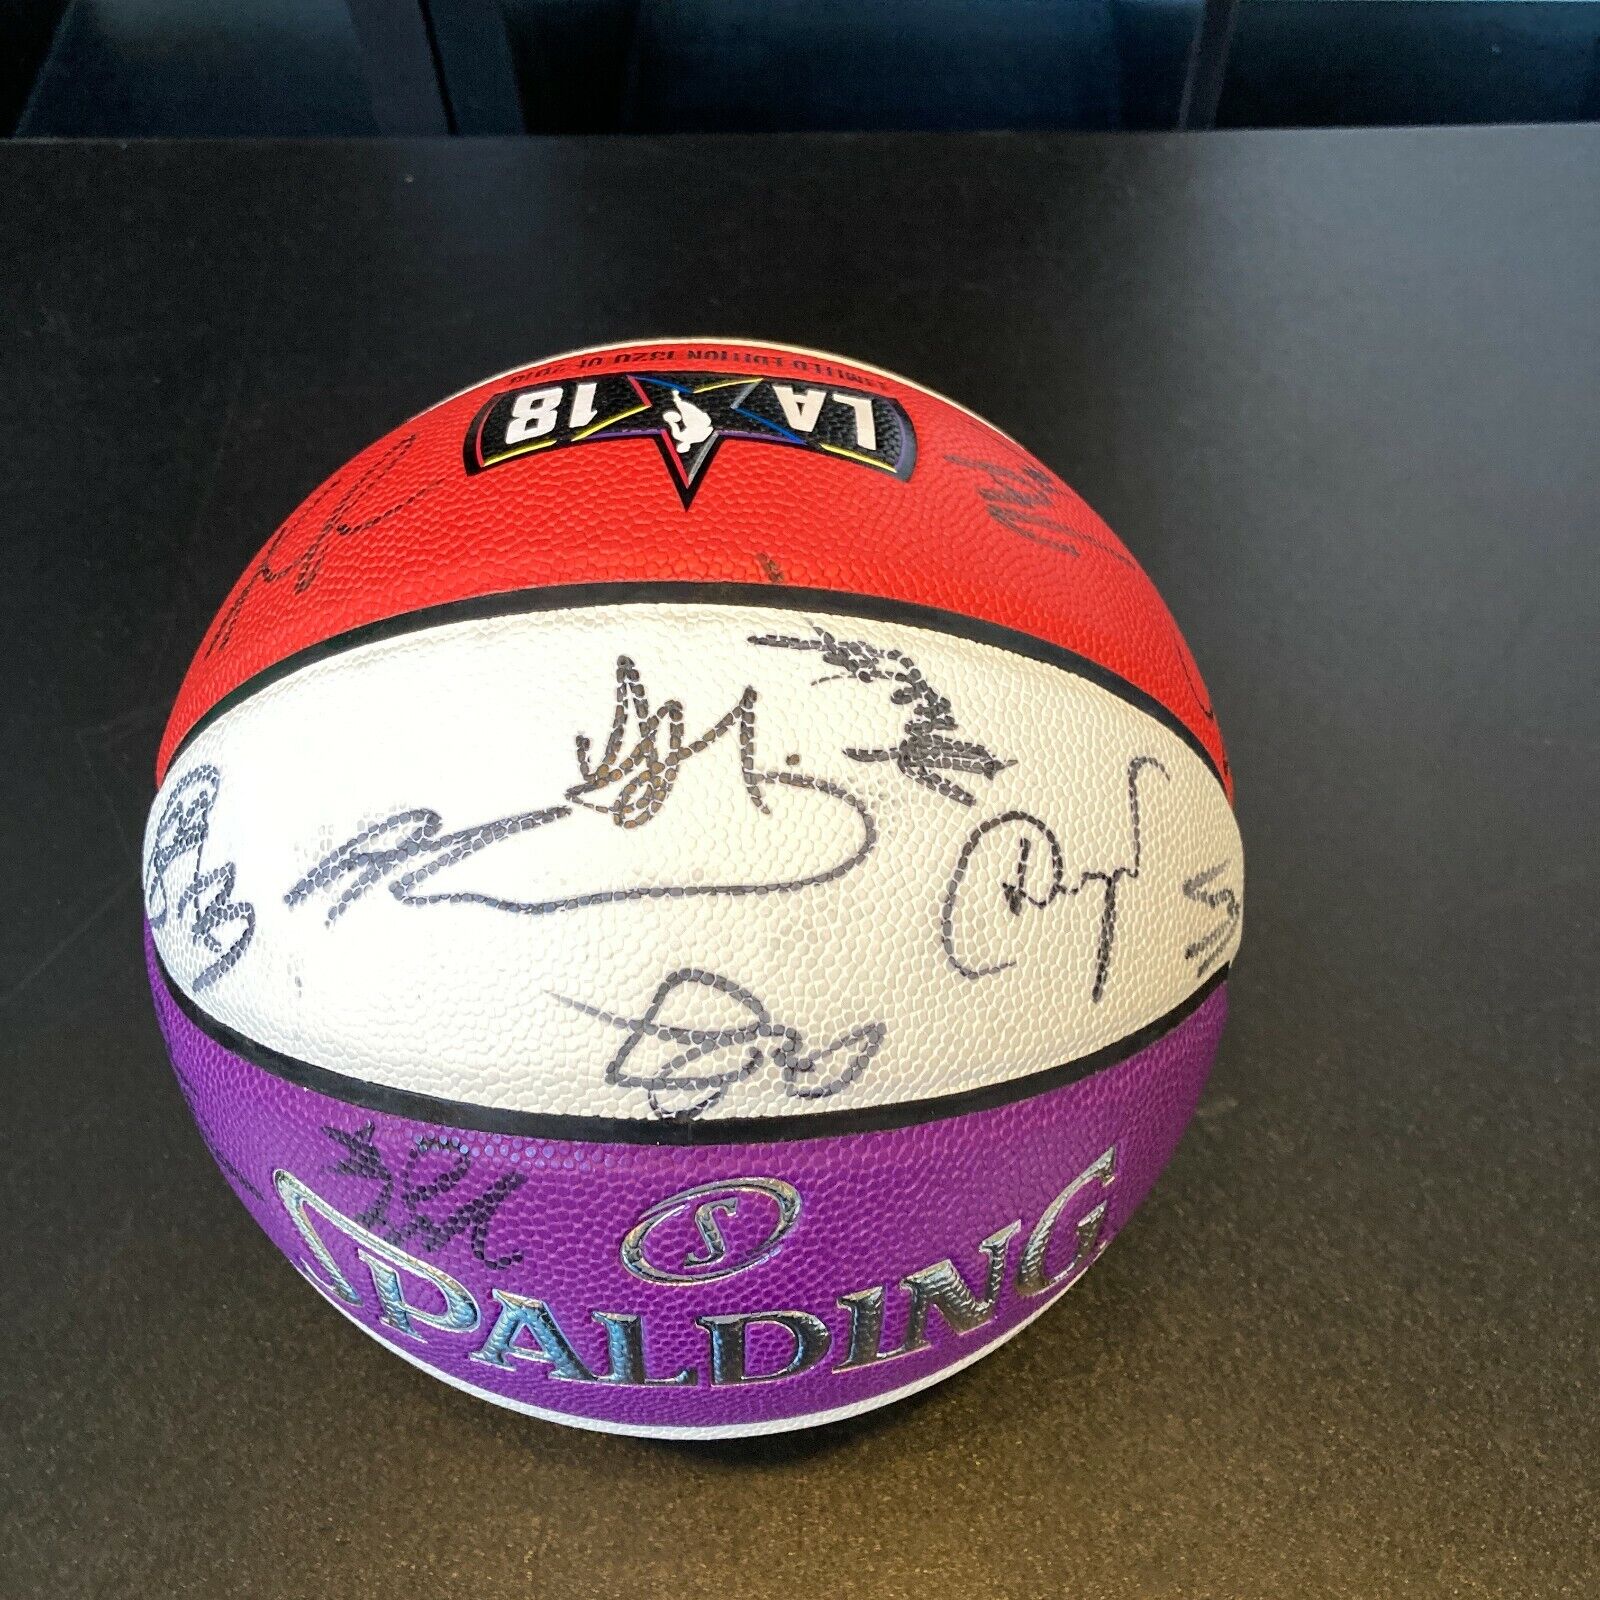 Paul George - 2018 NBA All-Star Game - Team LeBron - Autographed